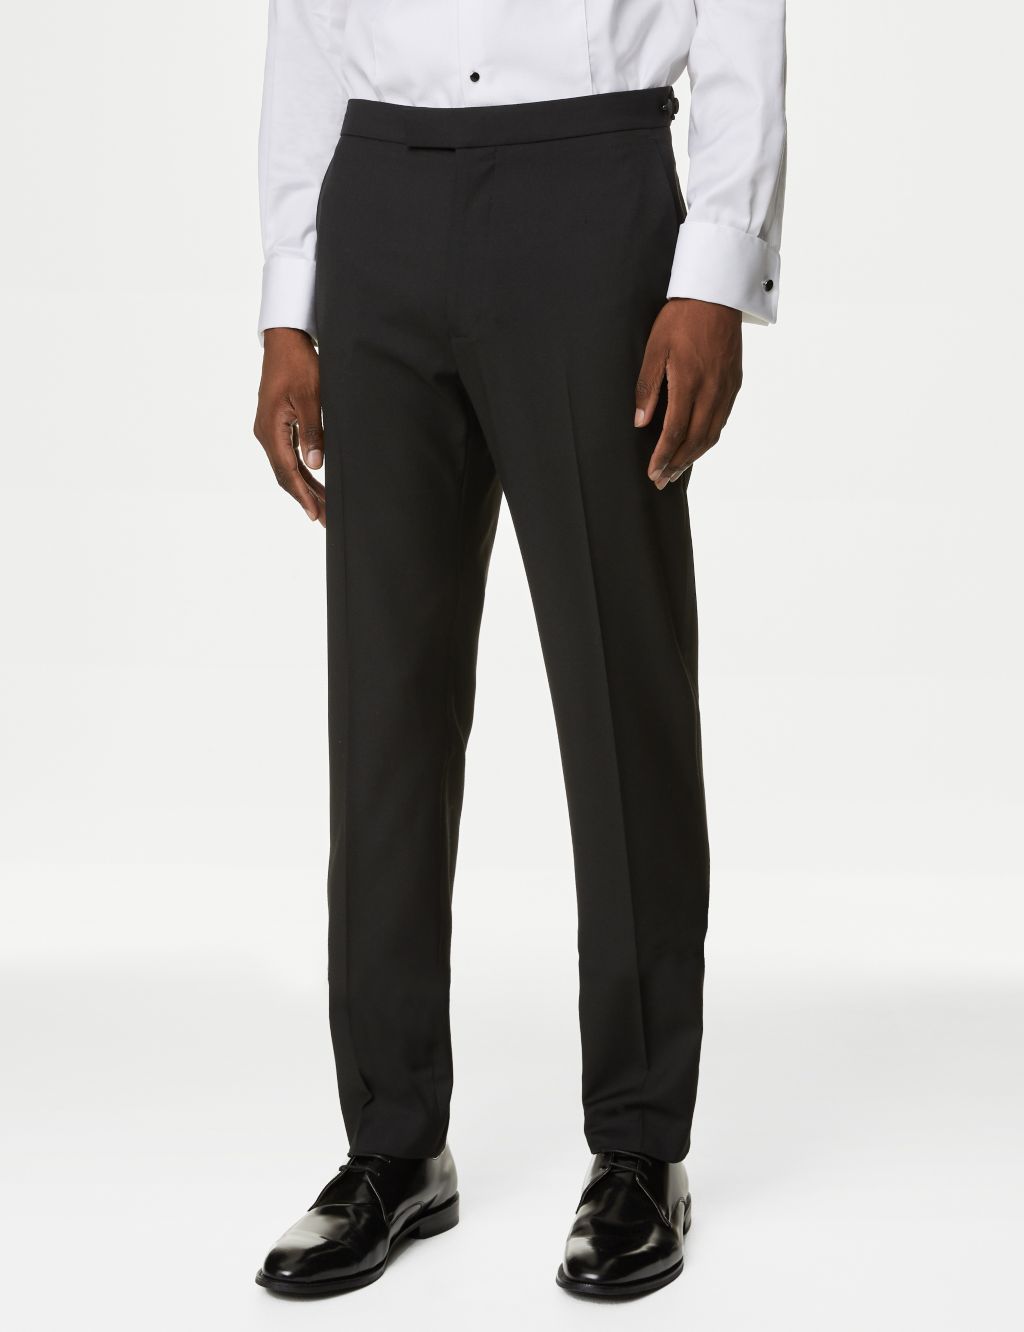 Slim Fit Stretch Tuxedo Suit image 4